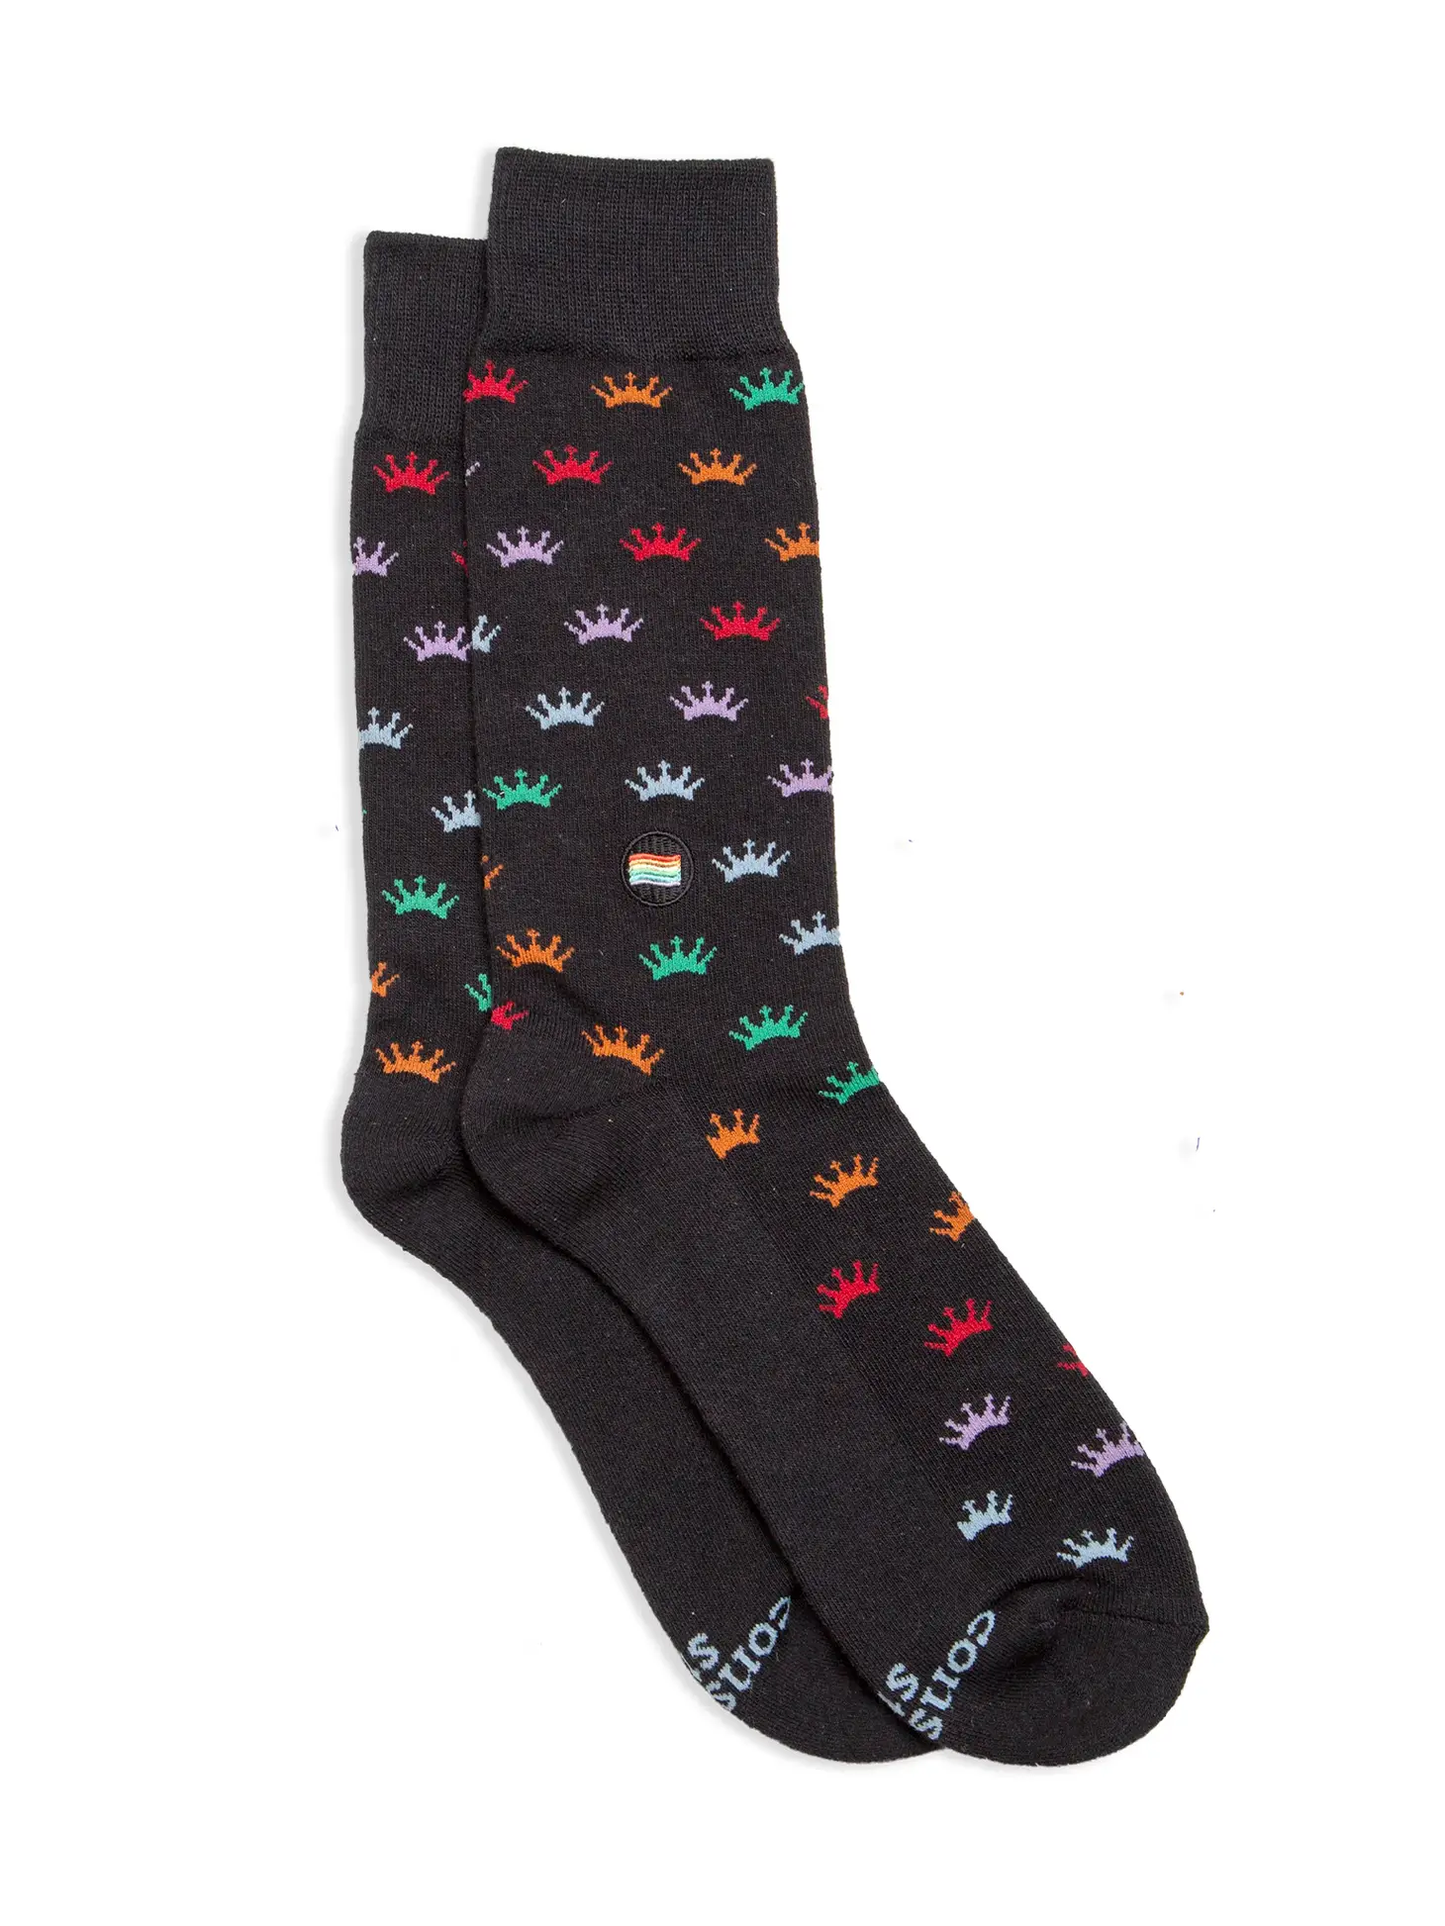 Socks That Save LGBTQ Lives